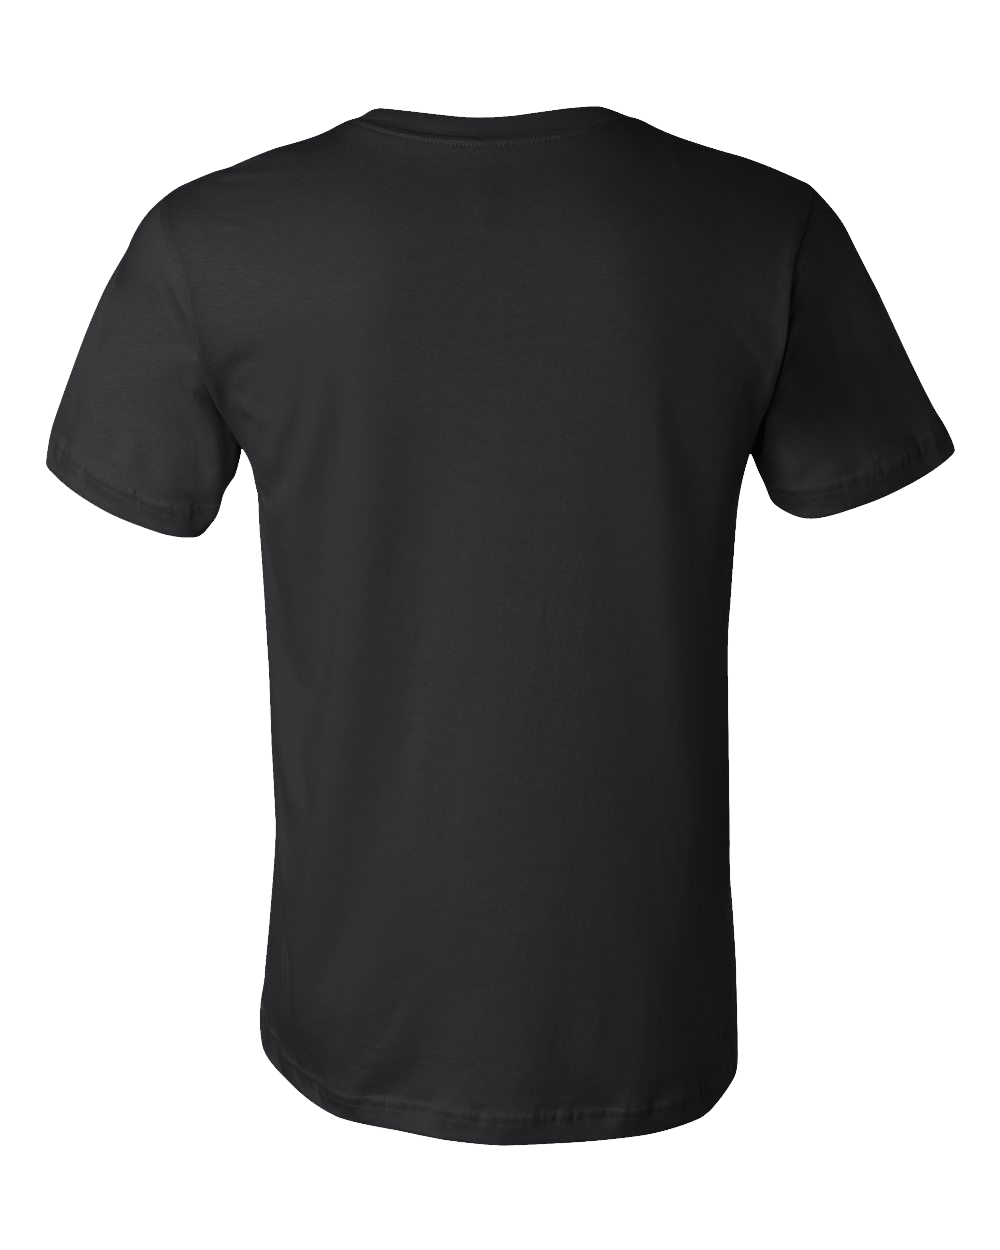 Standard Black Eaton, OH | Retro, Vintage Style Ohio Pride  T-shirt